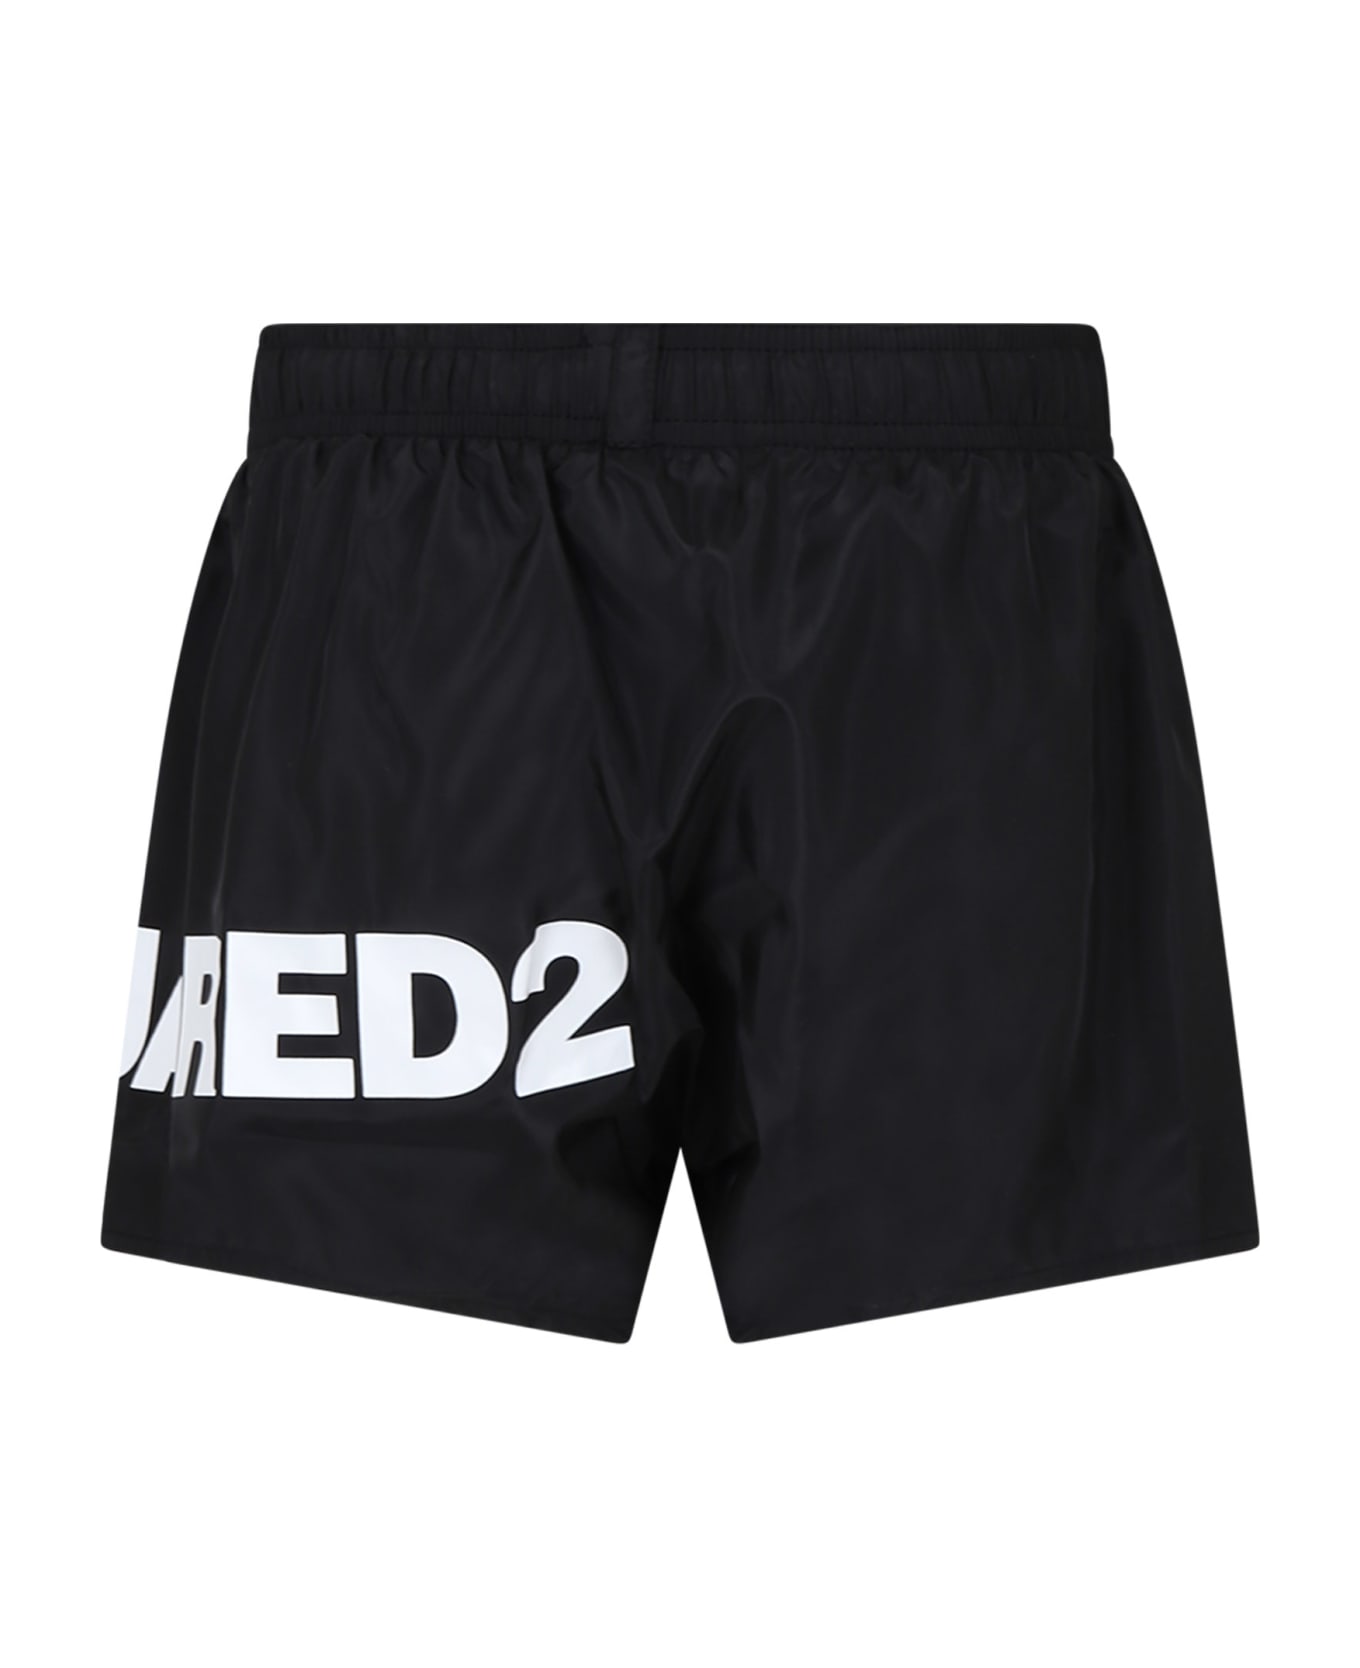 Dsquared2 Black Swim Shorts For Boy With Logo - Black